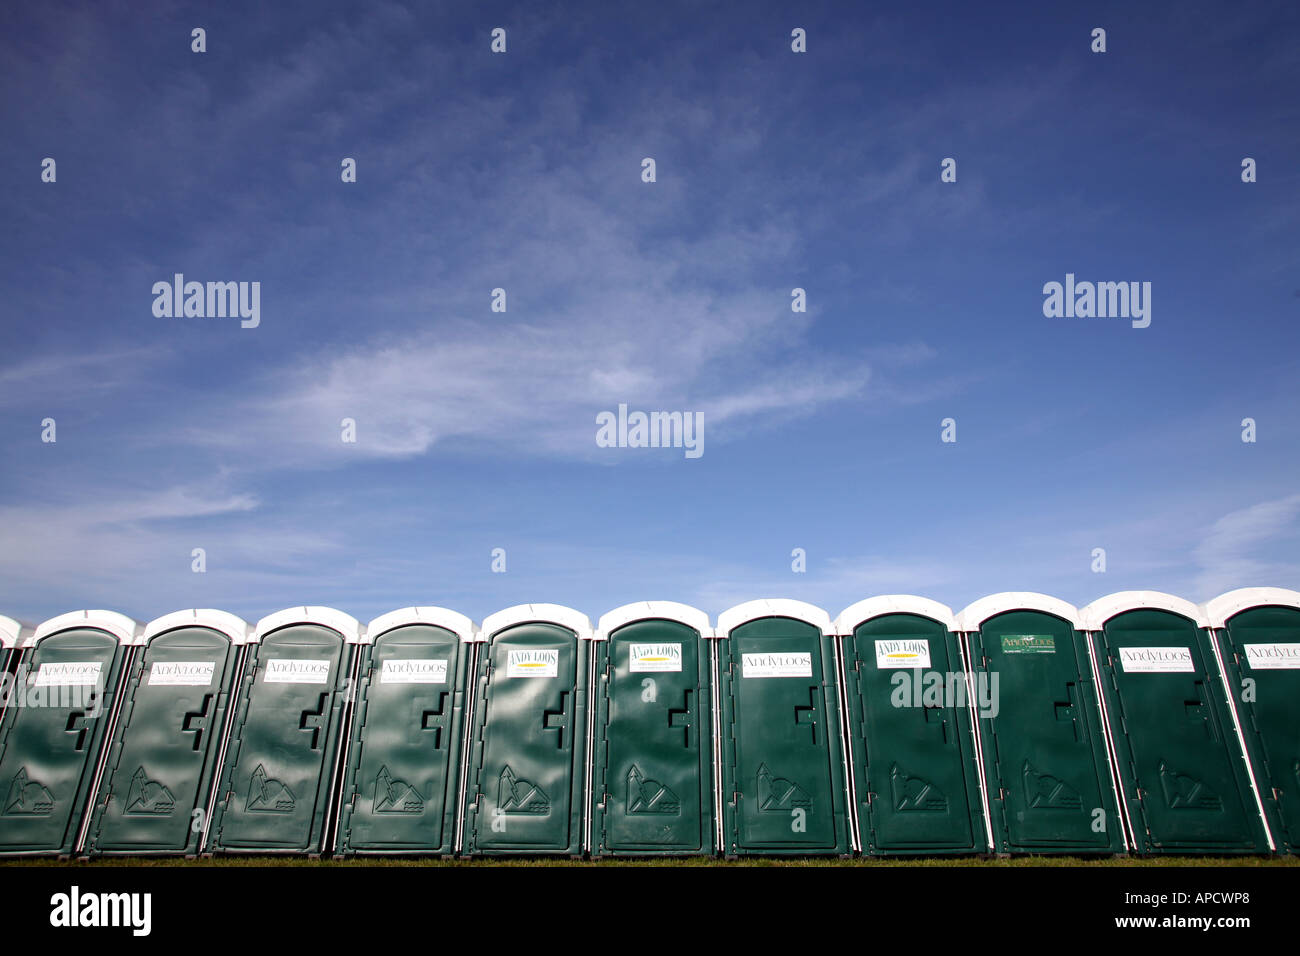 A row of green portable toilets Stock Photo